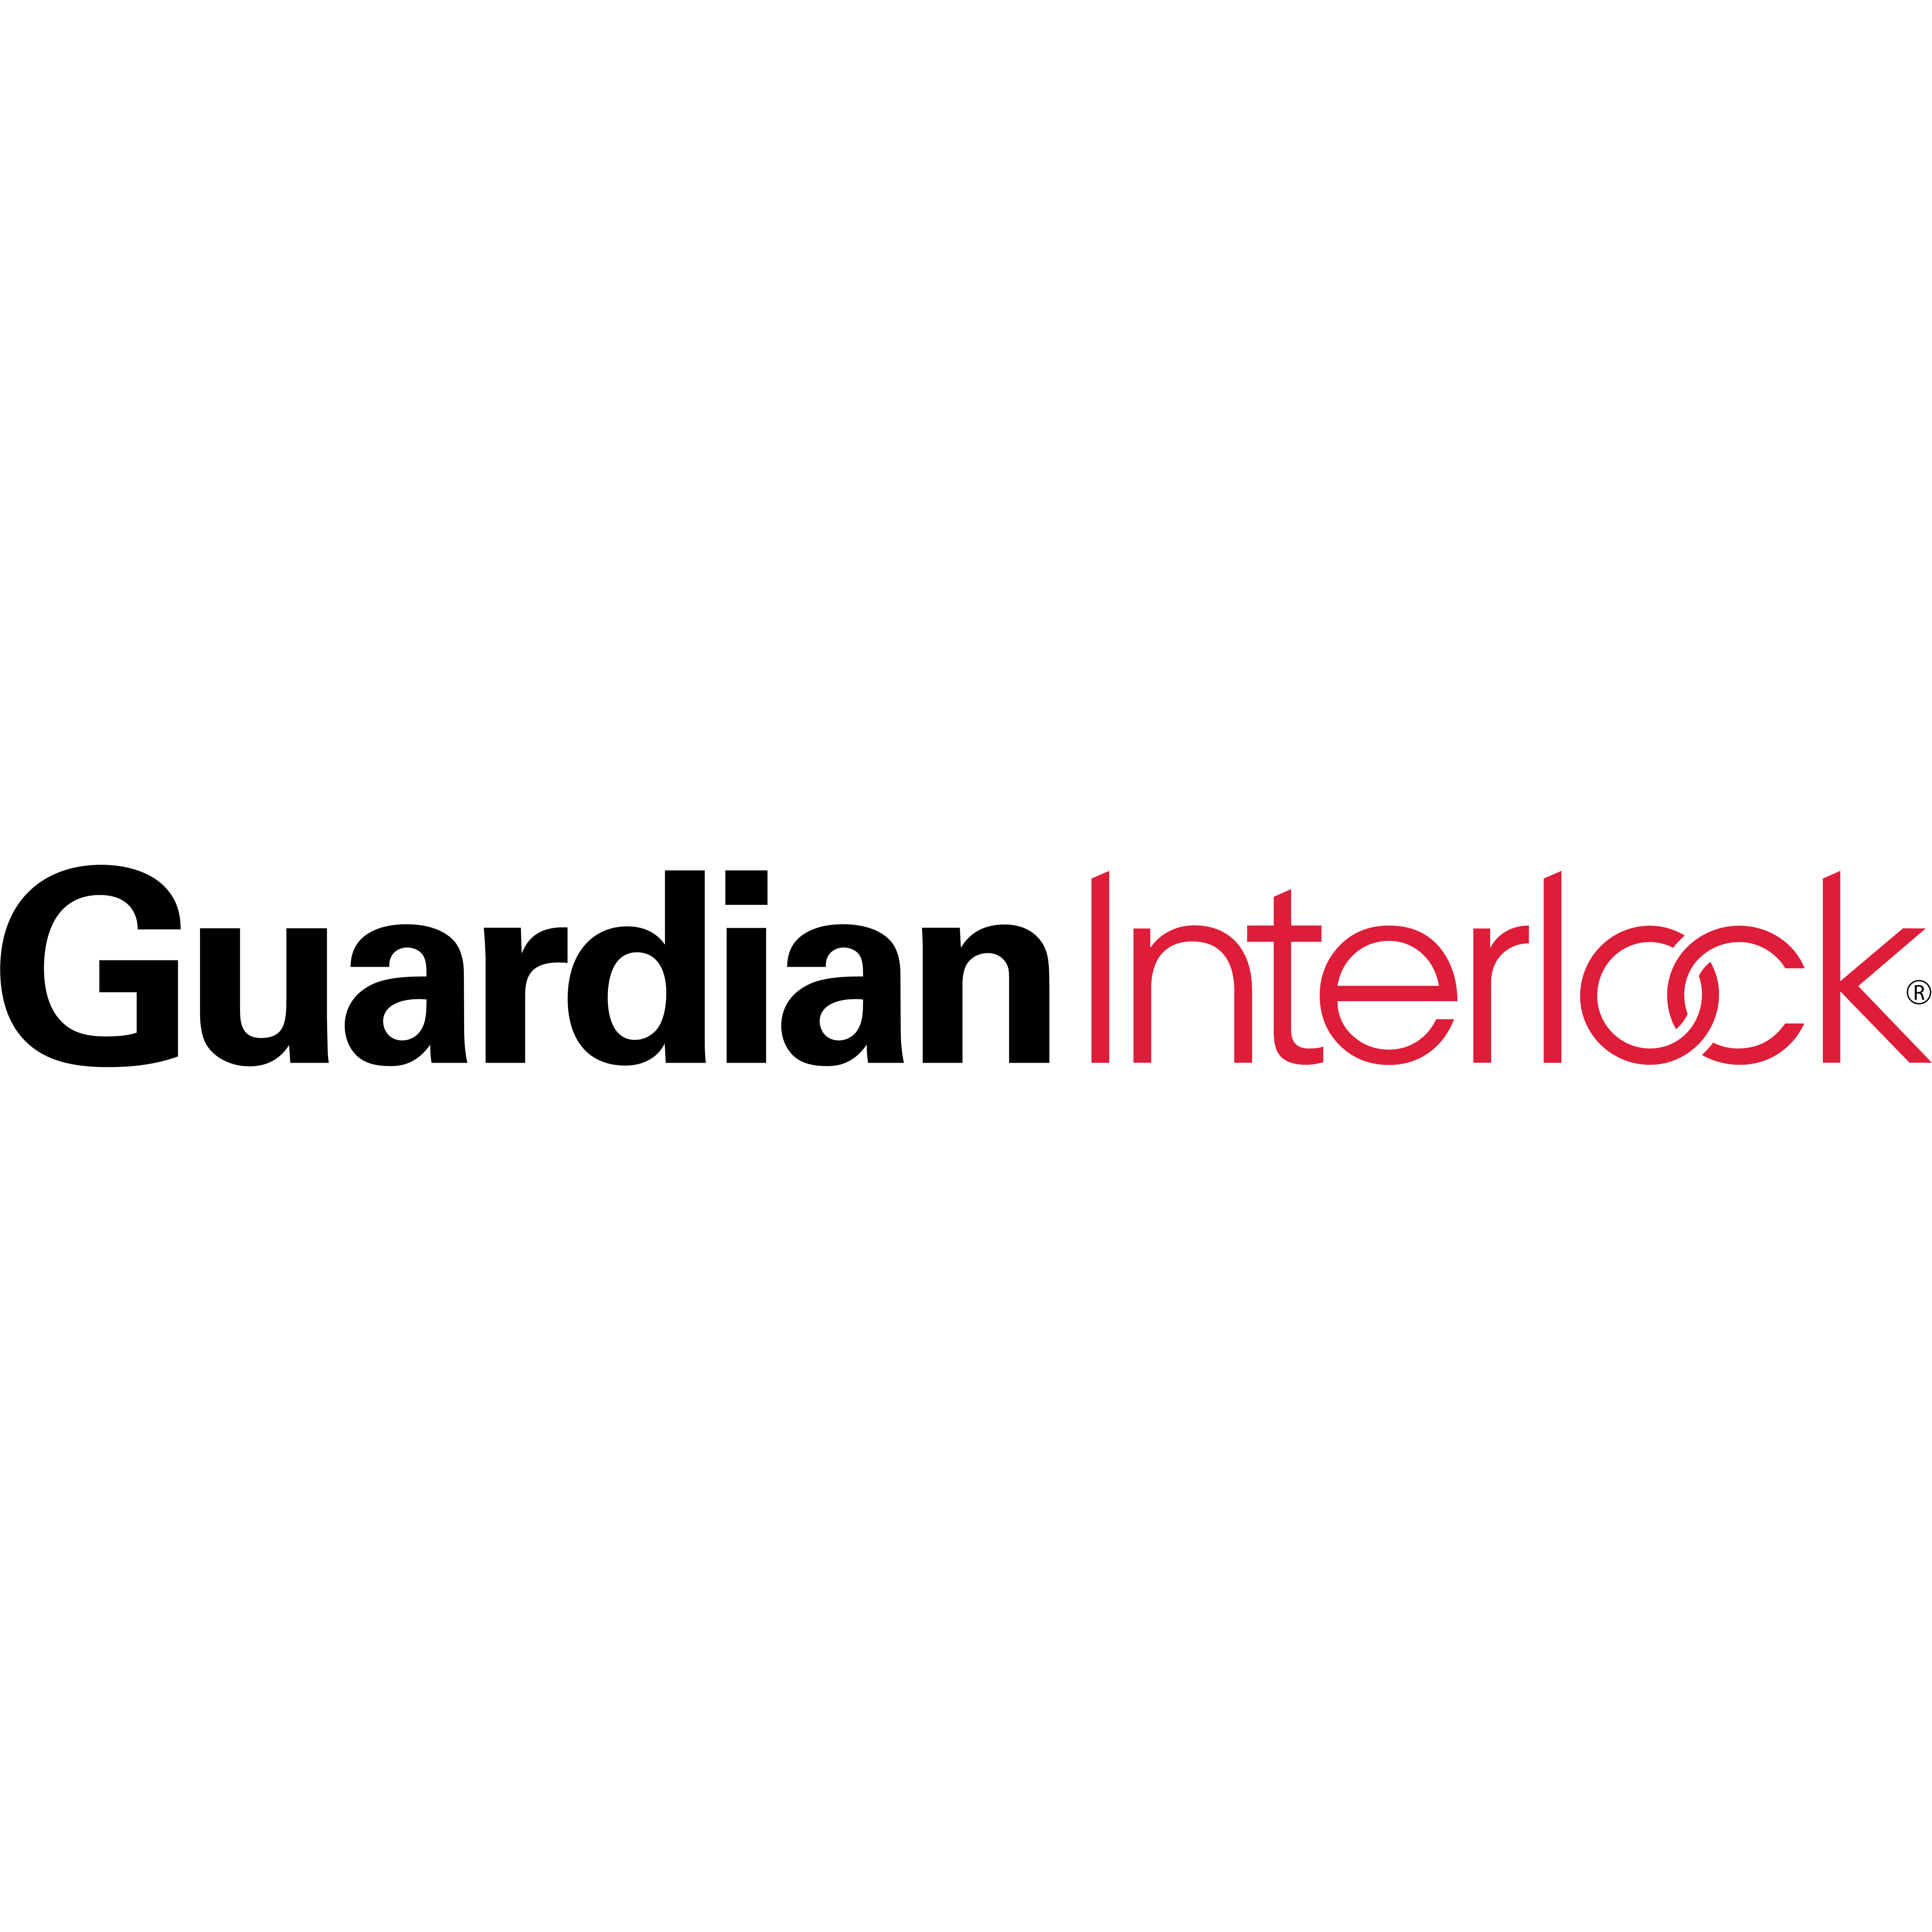 Guardian Interlock - Corbin, KY 40701 - (606)547-0954 | ShowMeLocal.com